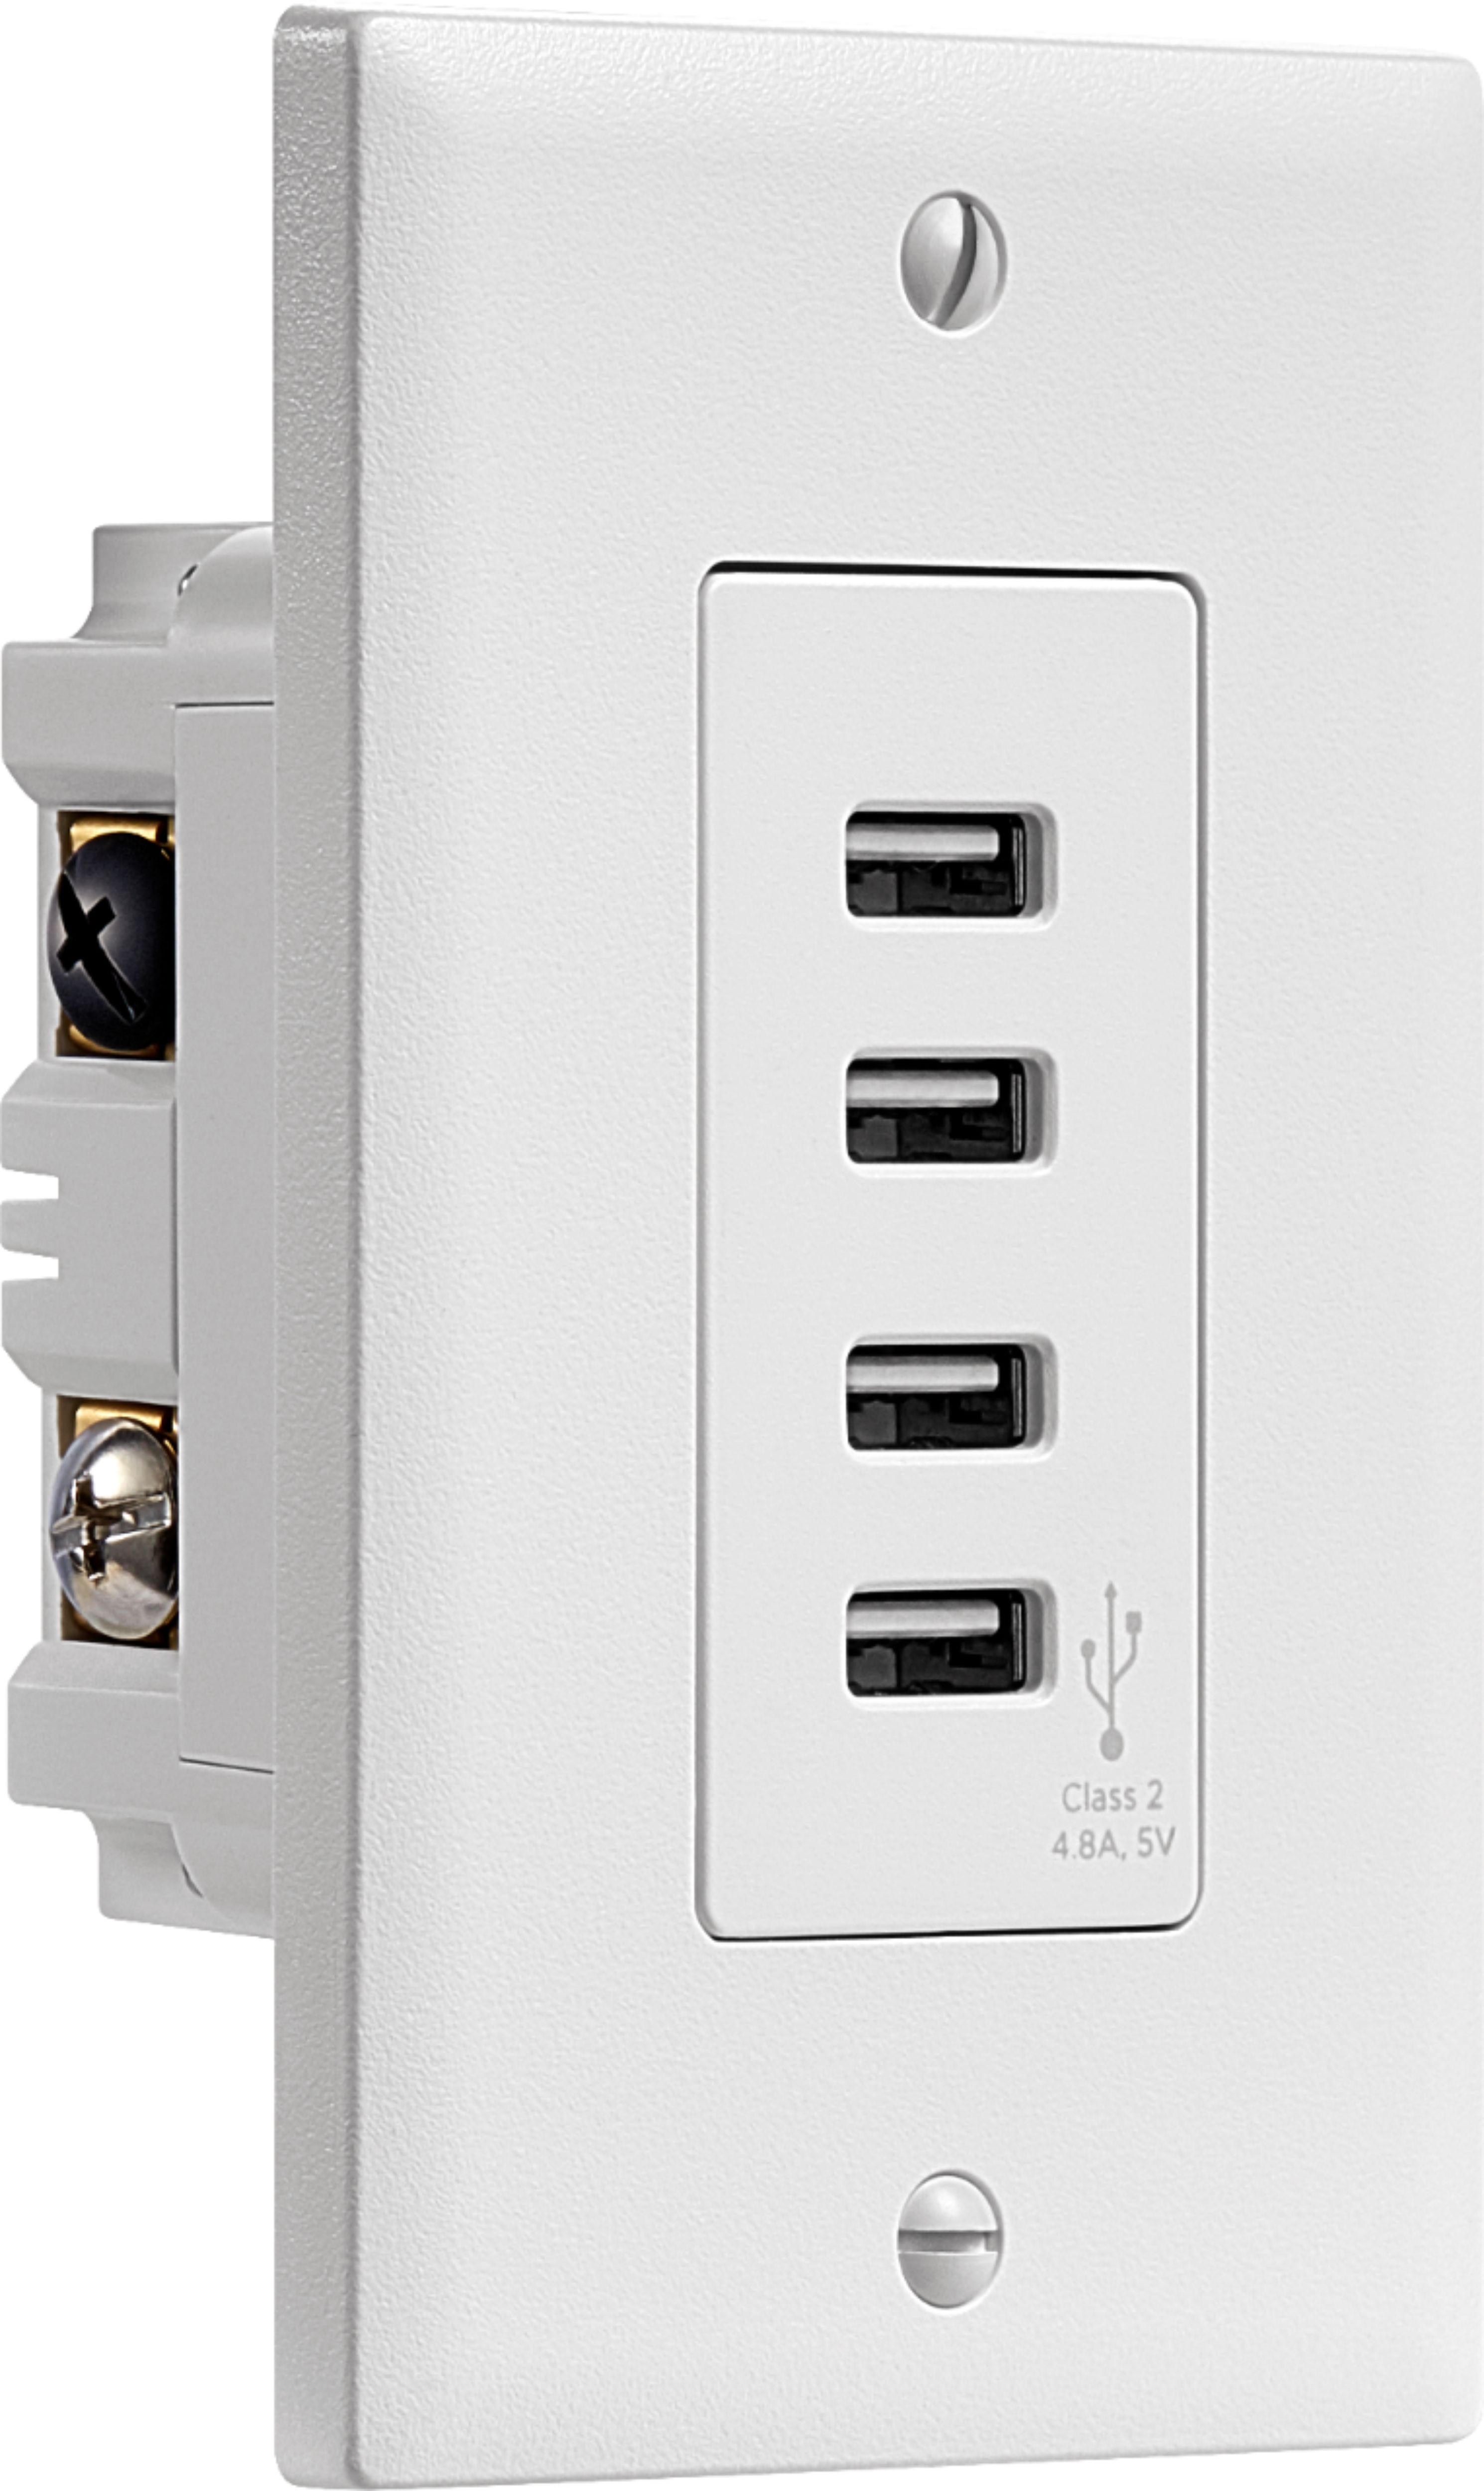 DC 5V 4 Port USB Home Wall Charger Plate Coupler Outlet Power Socket Plug Panel 